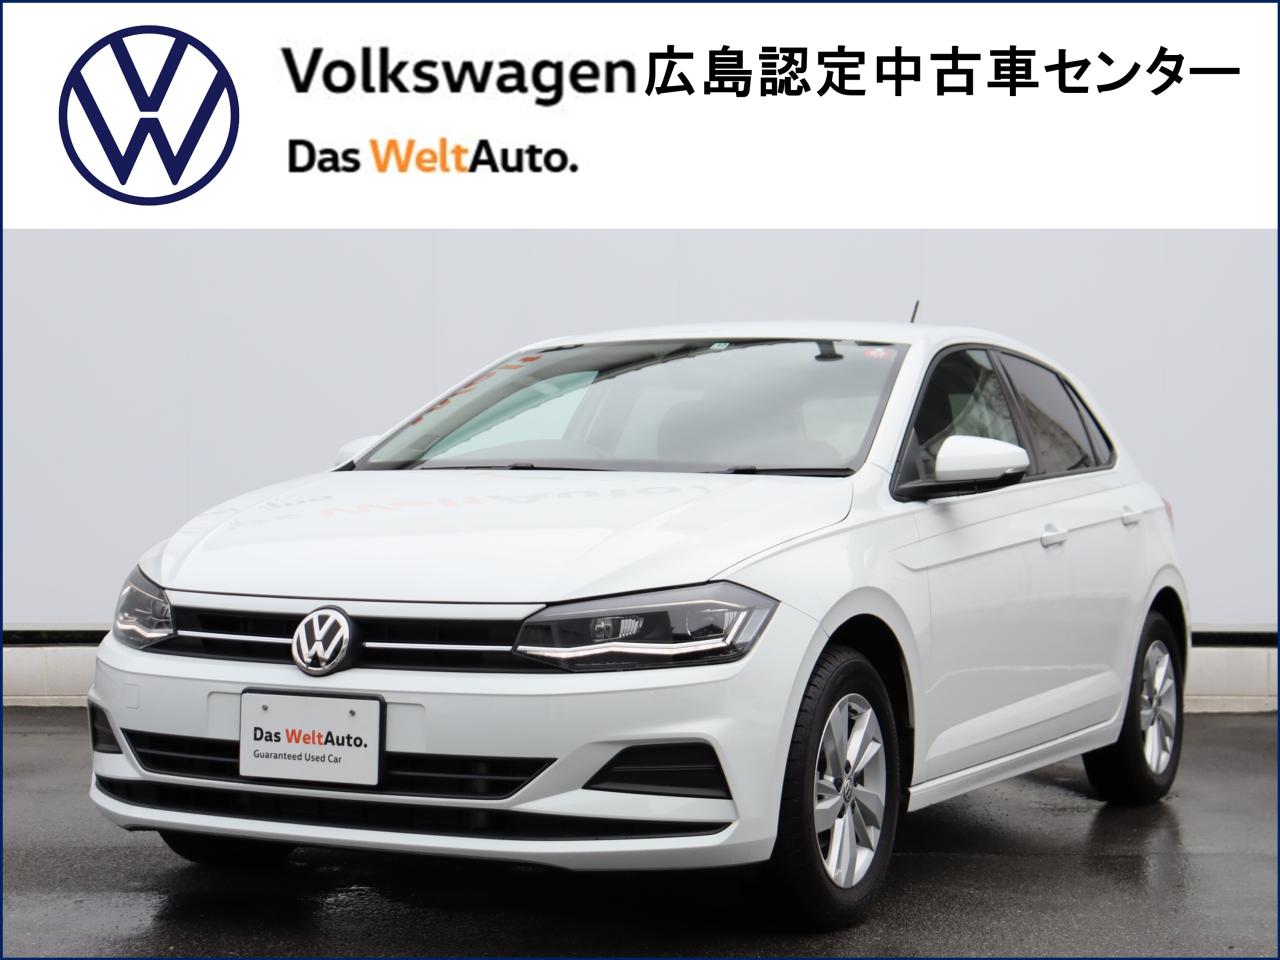 Das WeltAuto.】フォルクスワーゲン認定中古車：Volkswagen Guaranteed